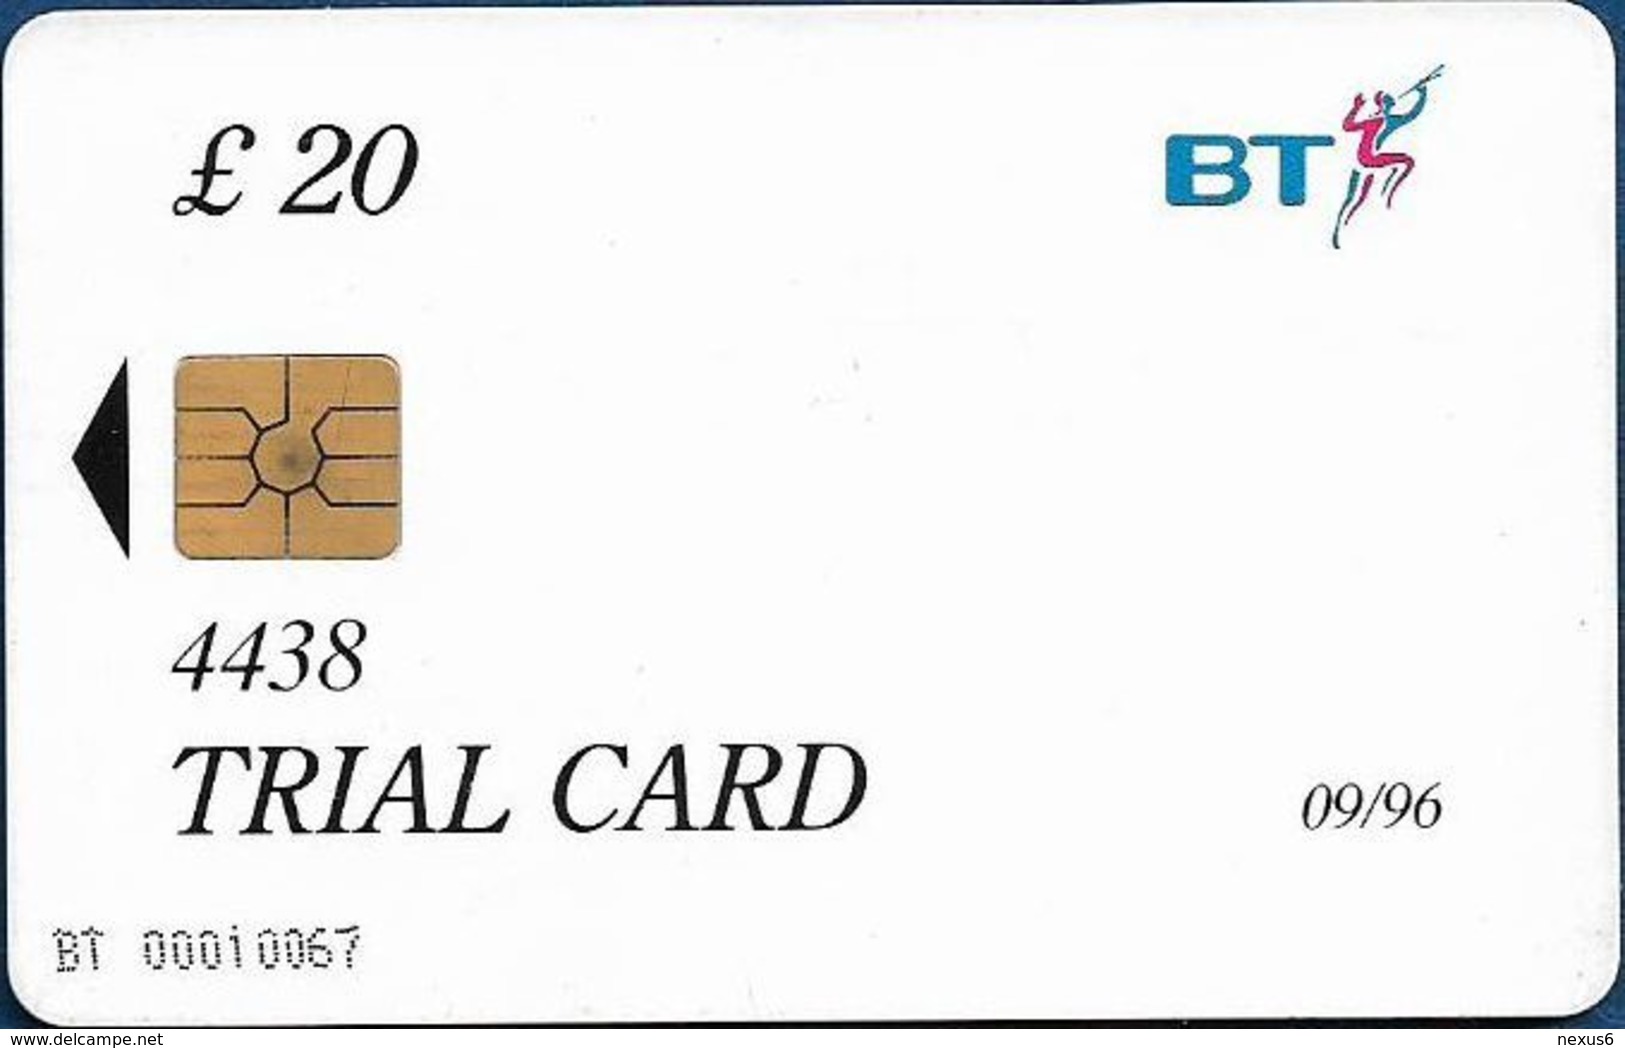 UK - BT - BCF - Rose Trial Card 20£, TRL016a (With Date, Written 4438, Big Gemplus), 09.1996, 2.000ex, Used - BT Test & Essais